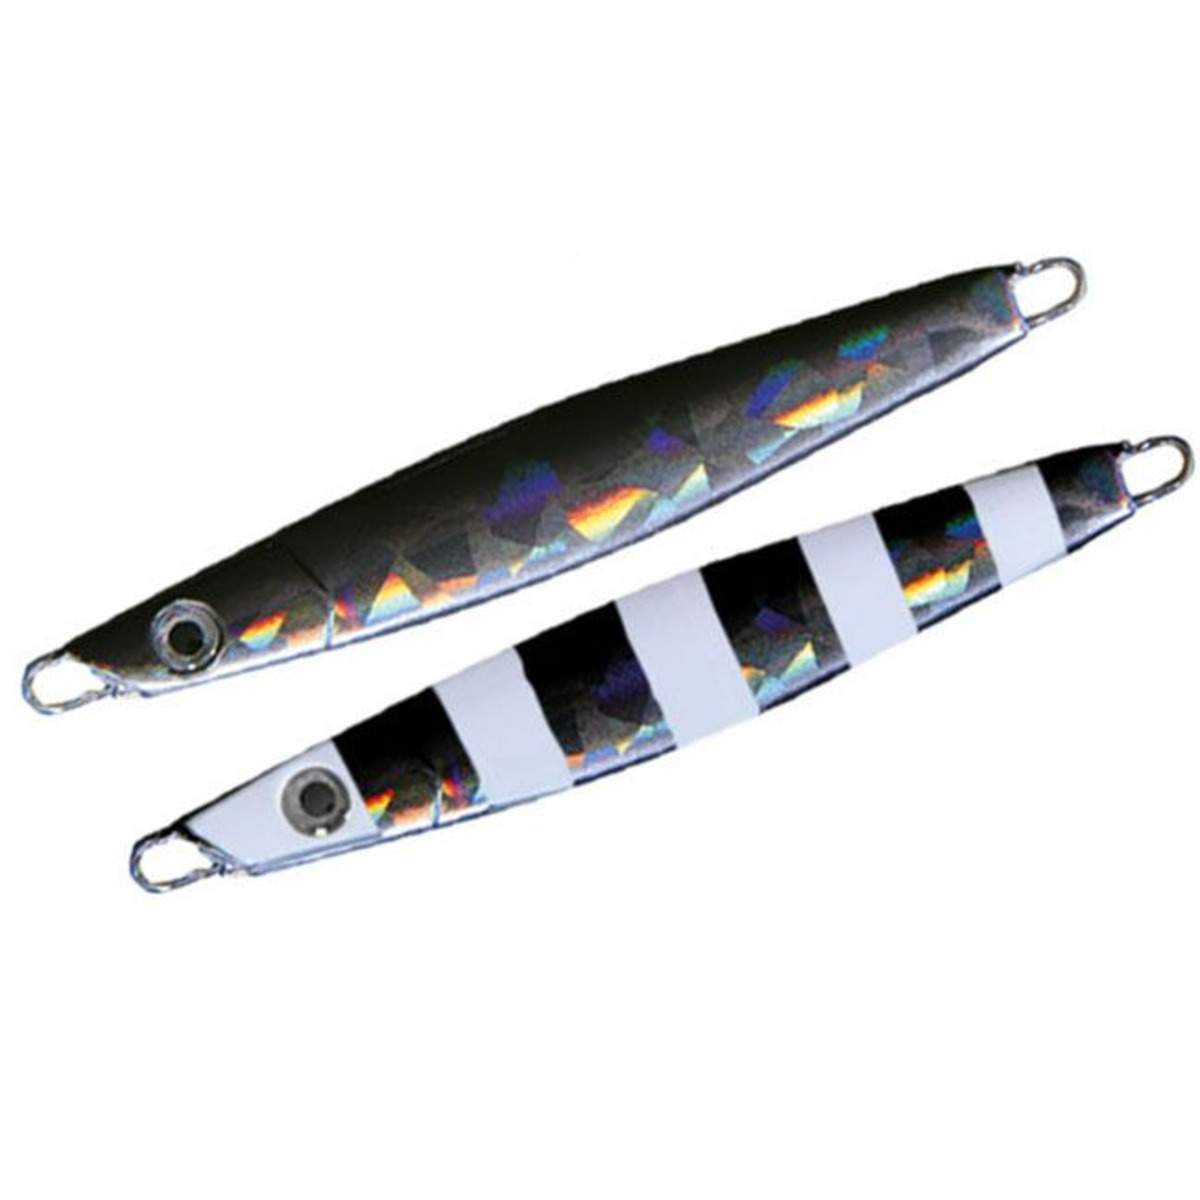 Nomura Sato Single Hook - 35 g - 8.0 cm - Silver Grey Stripes On Back